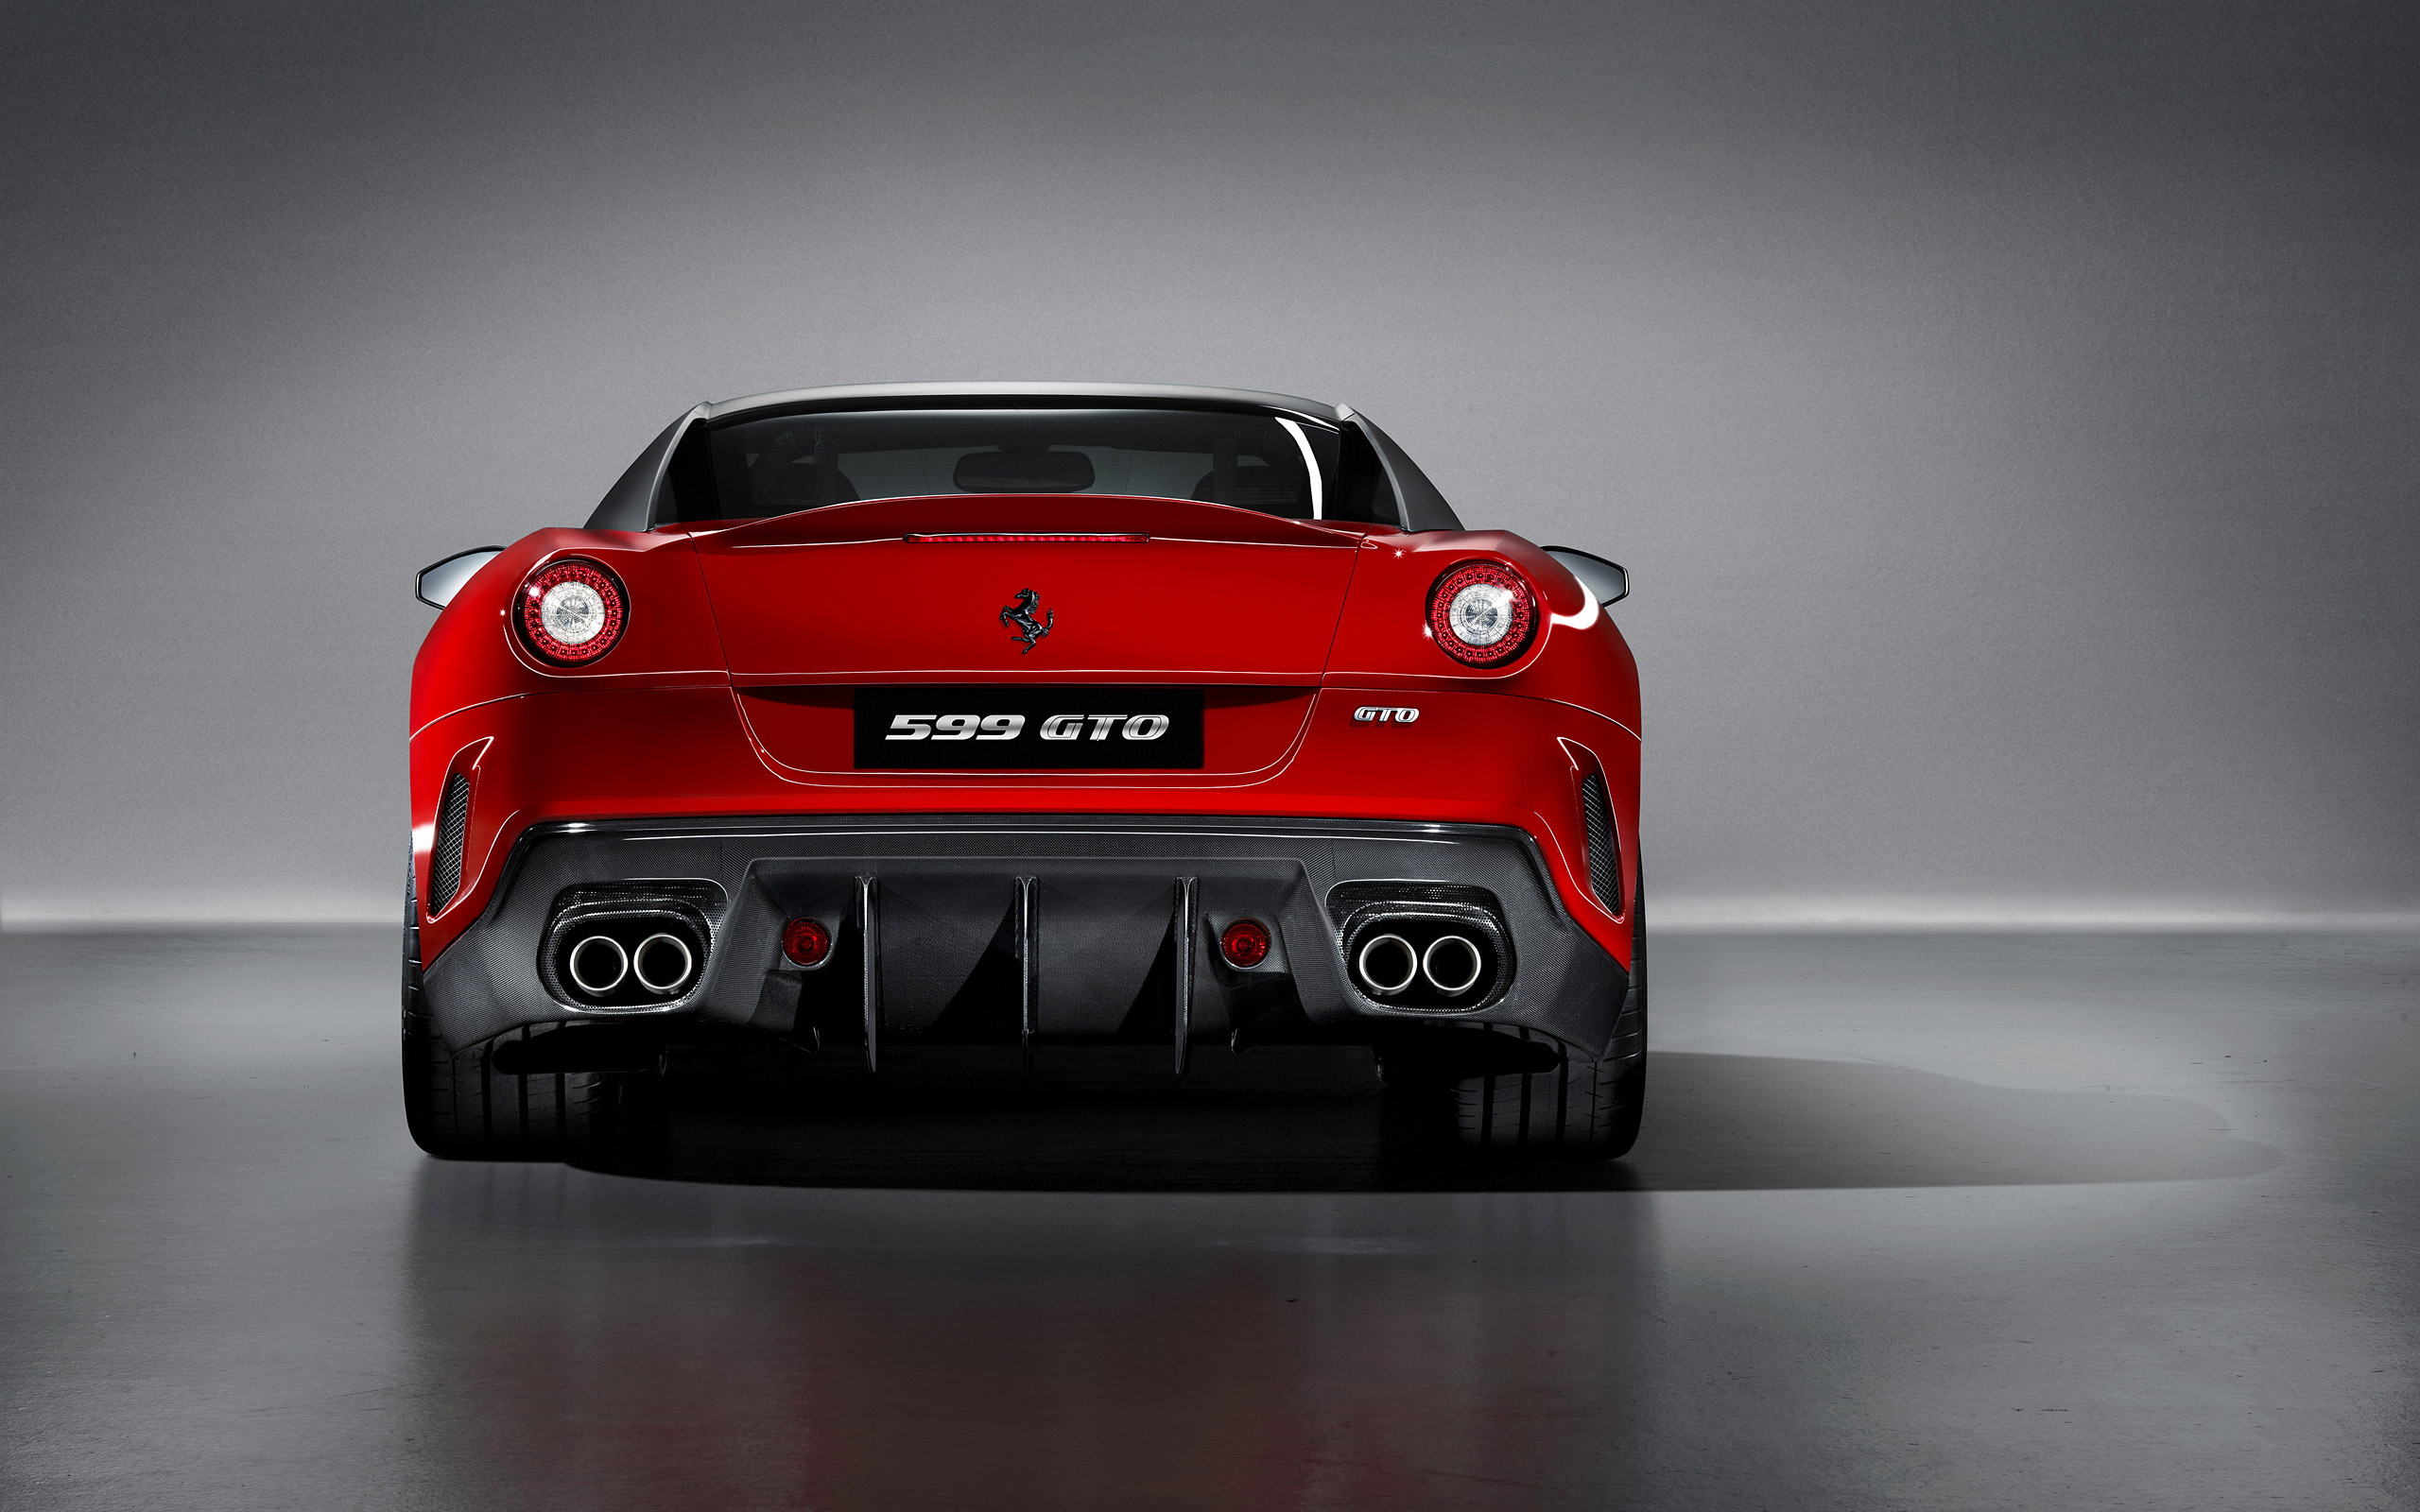  2010 Ferrari 599 GTO Wallpaper.